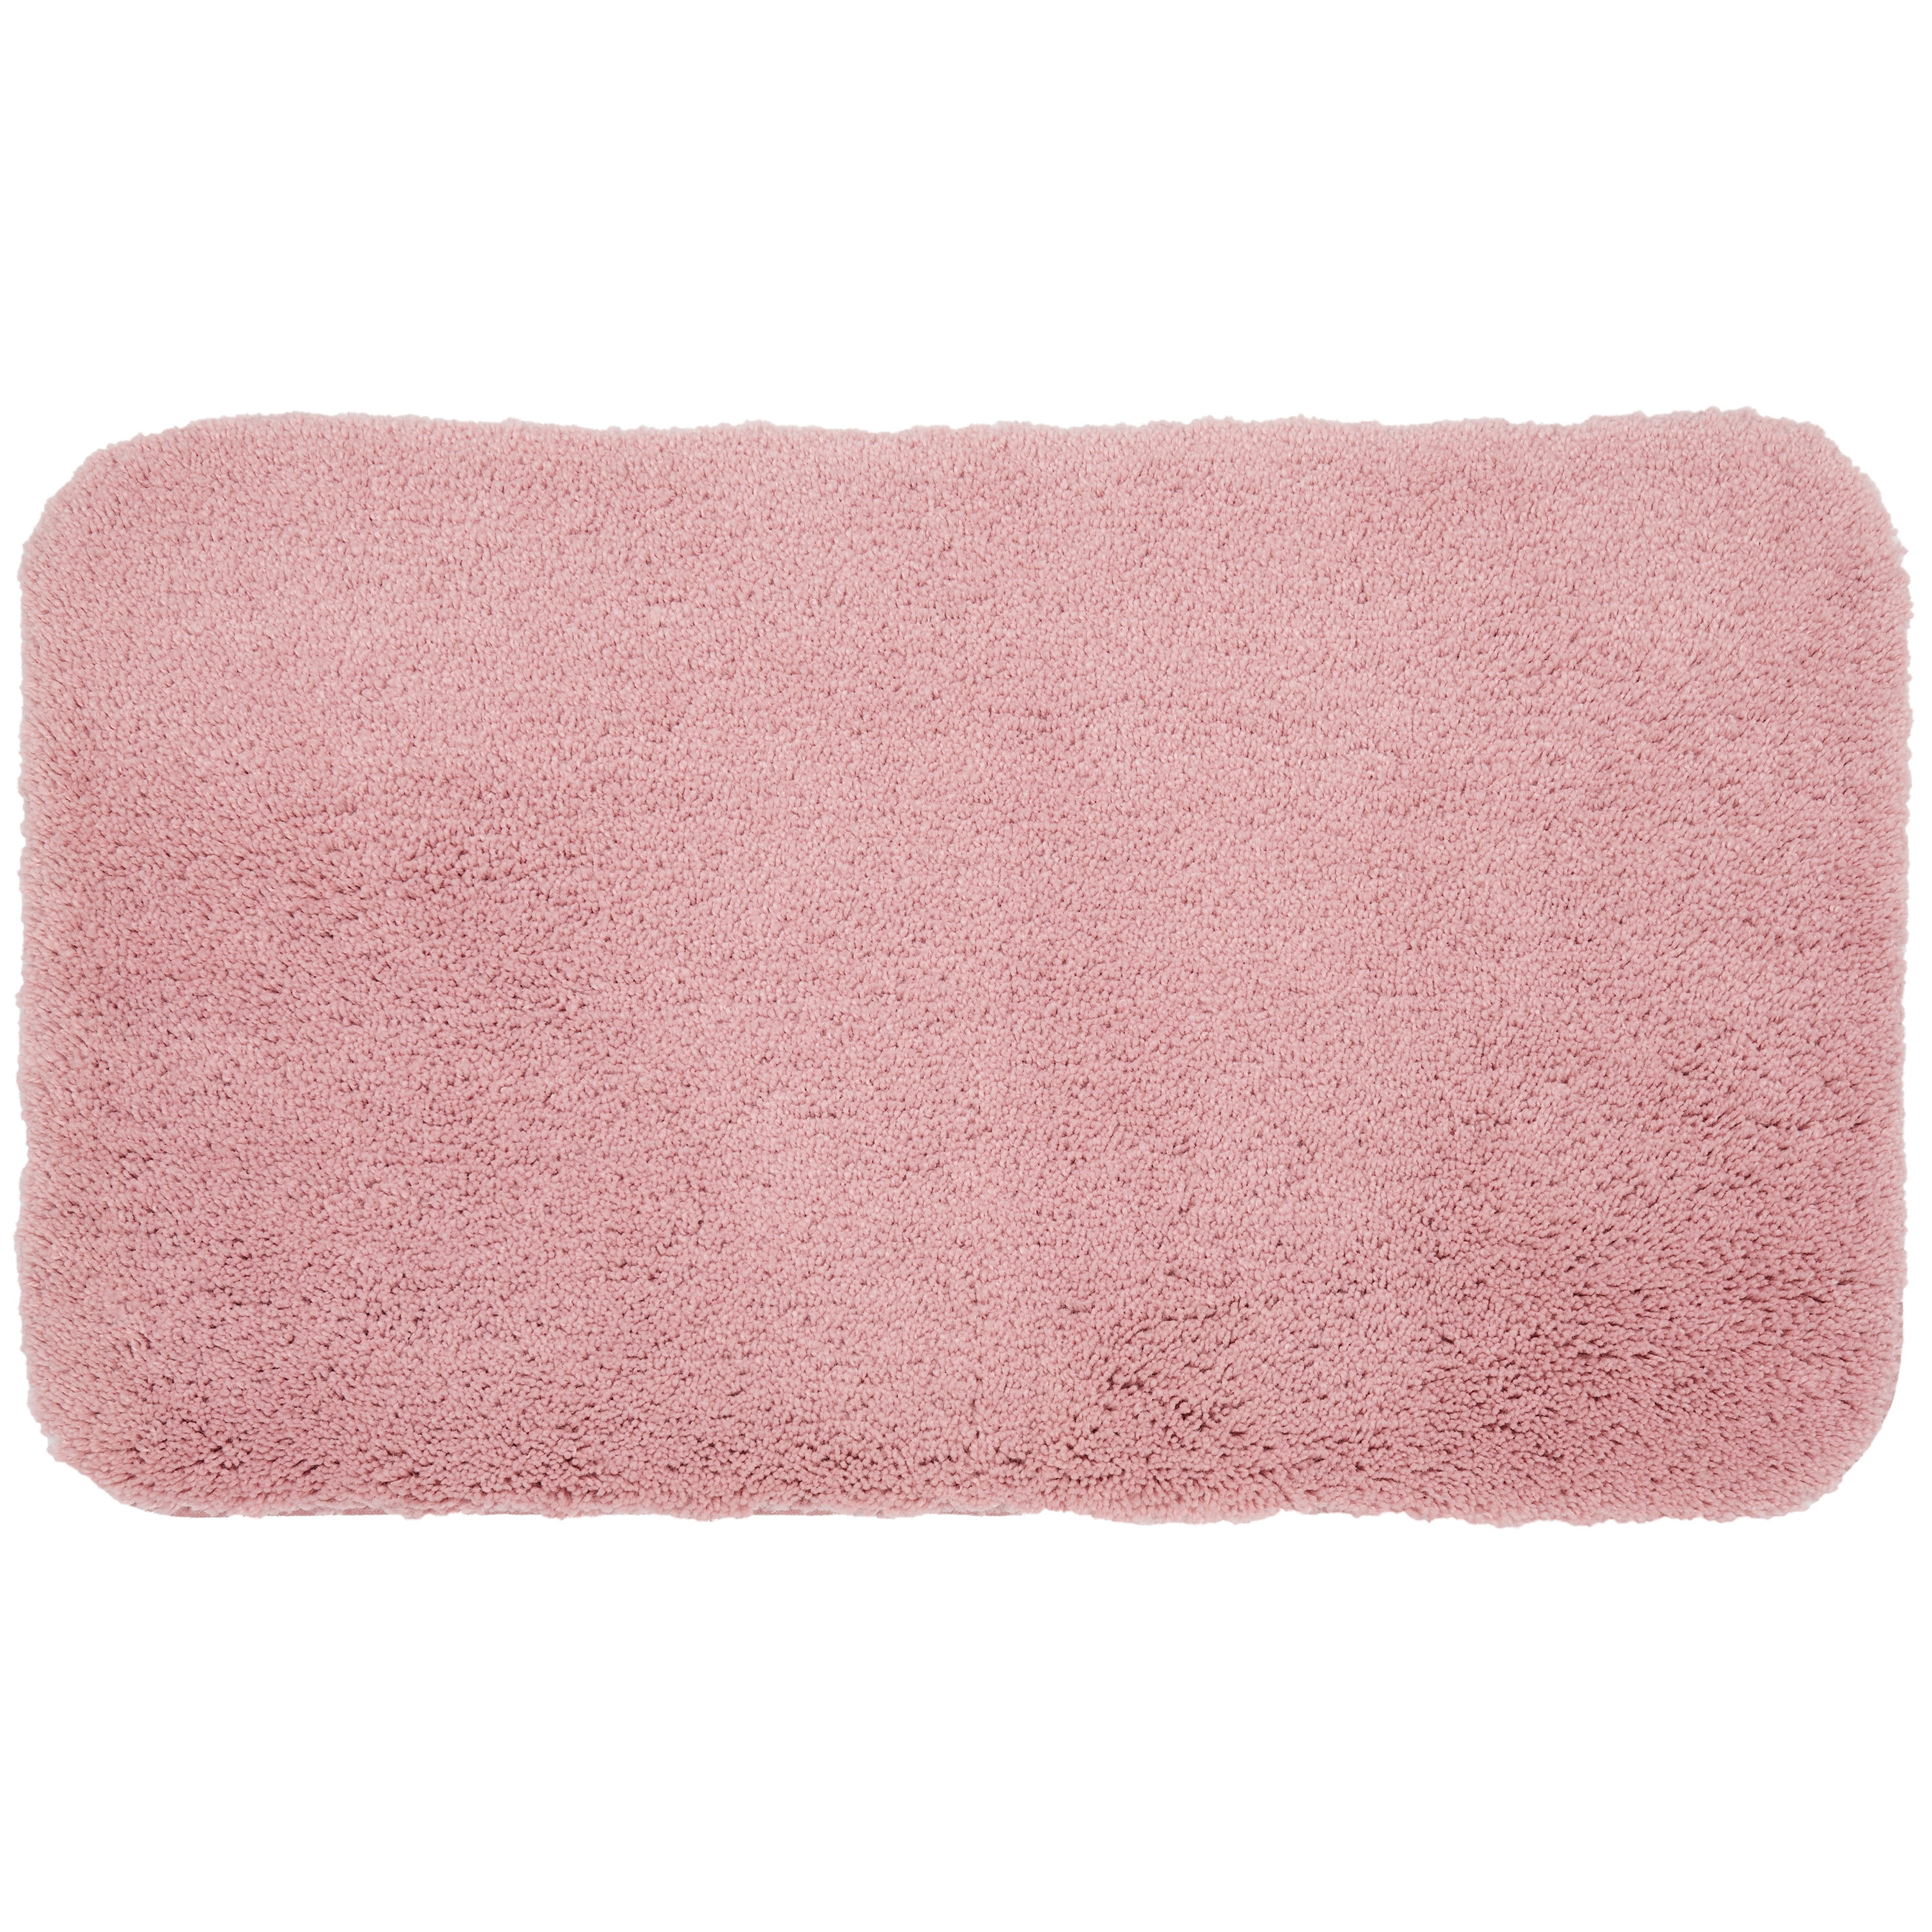  Joisal Stripe Pink Colors Design Threshold Bath Mats, Machine  Washable Non Skid Bath Rugs, Rubber Backing Bath Rug Runner, 39 x 20 Inches  : Home & Kitchen